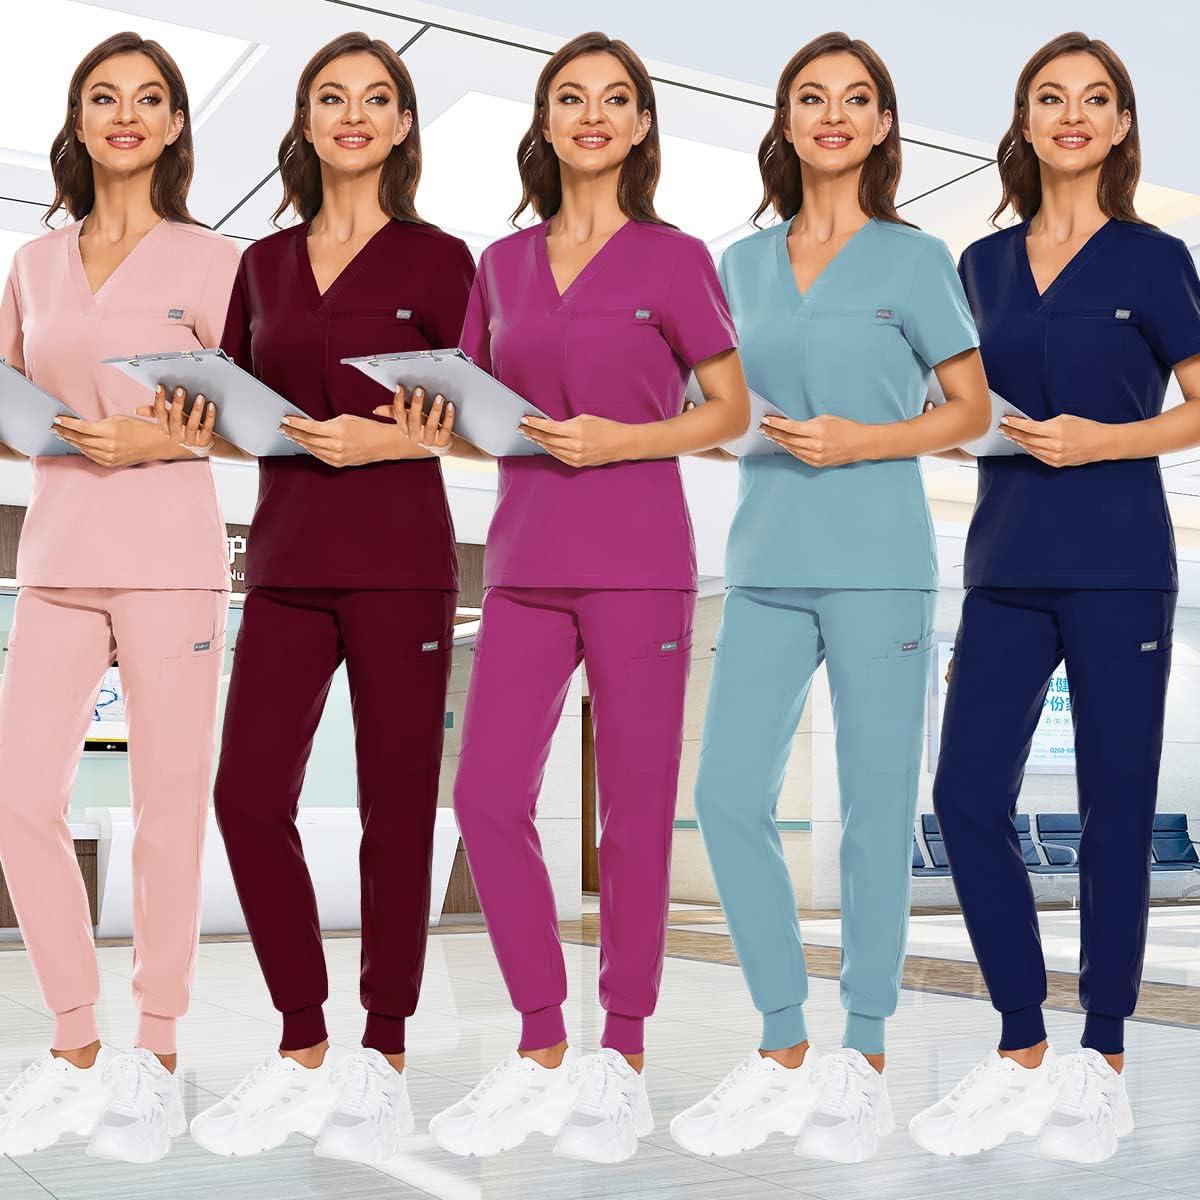 VIAOLI Scrubs for Women Set Uniforms Medical Women Sets V-Neck Top